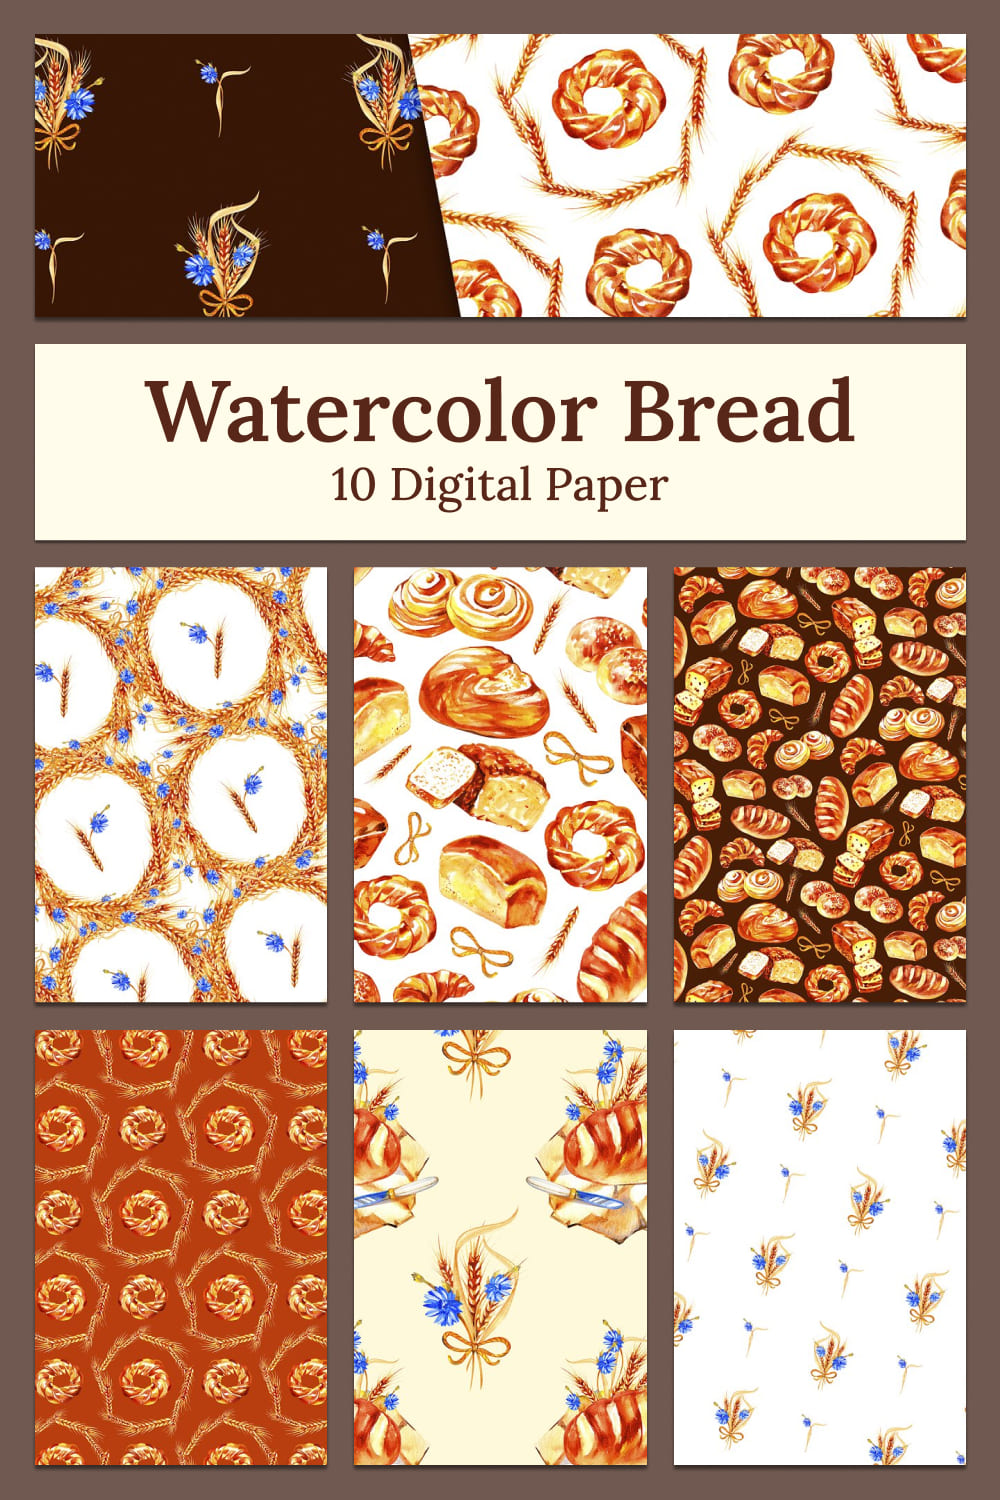 Watercolor bread 10 digital paper - pinterest image preview.